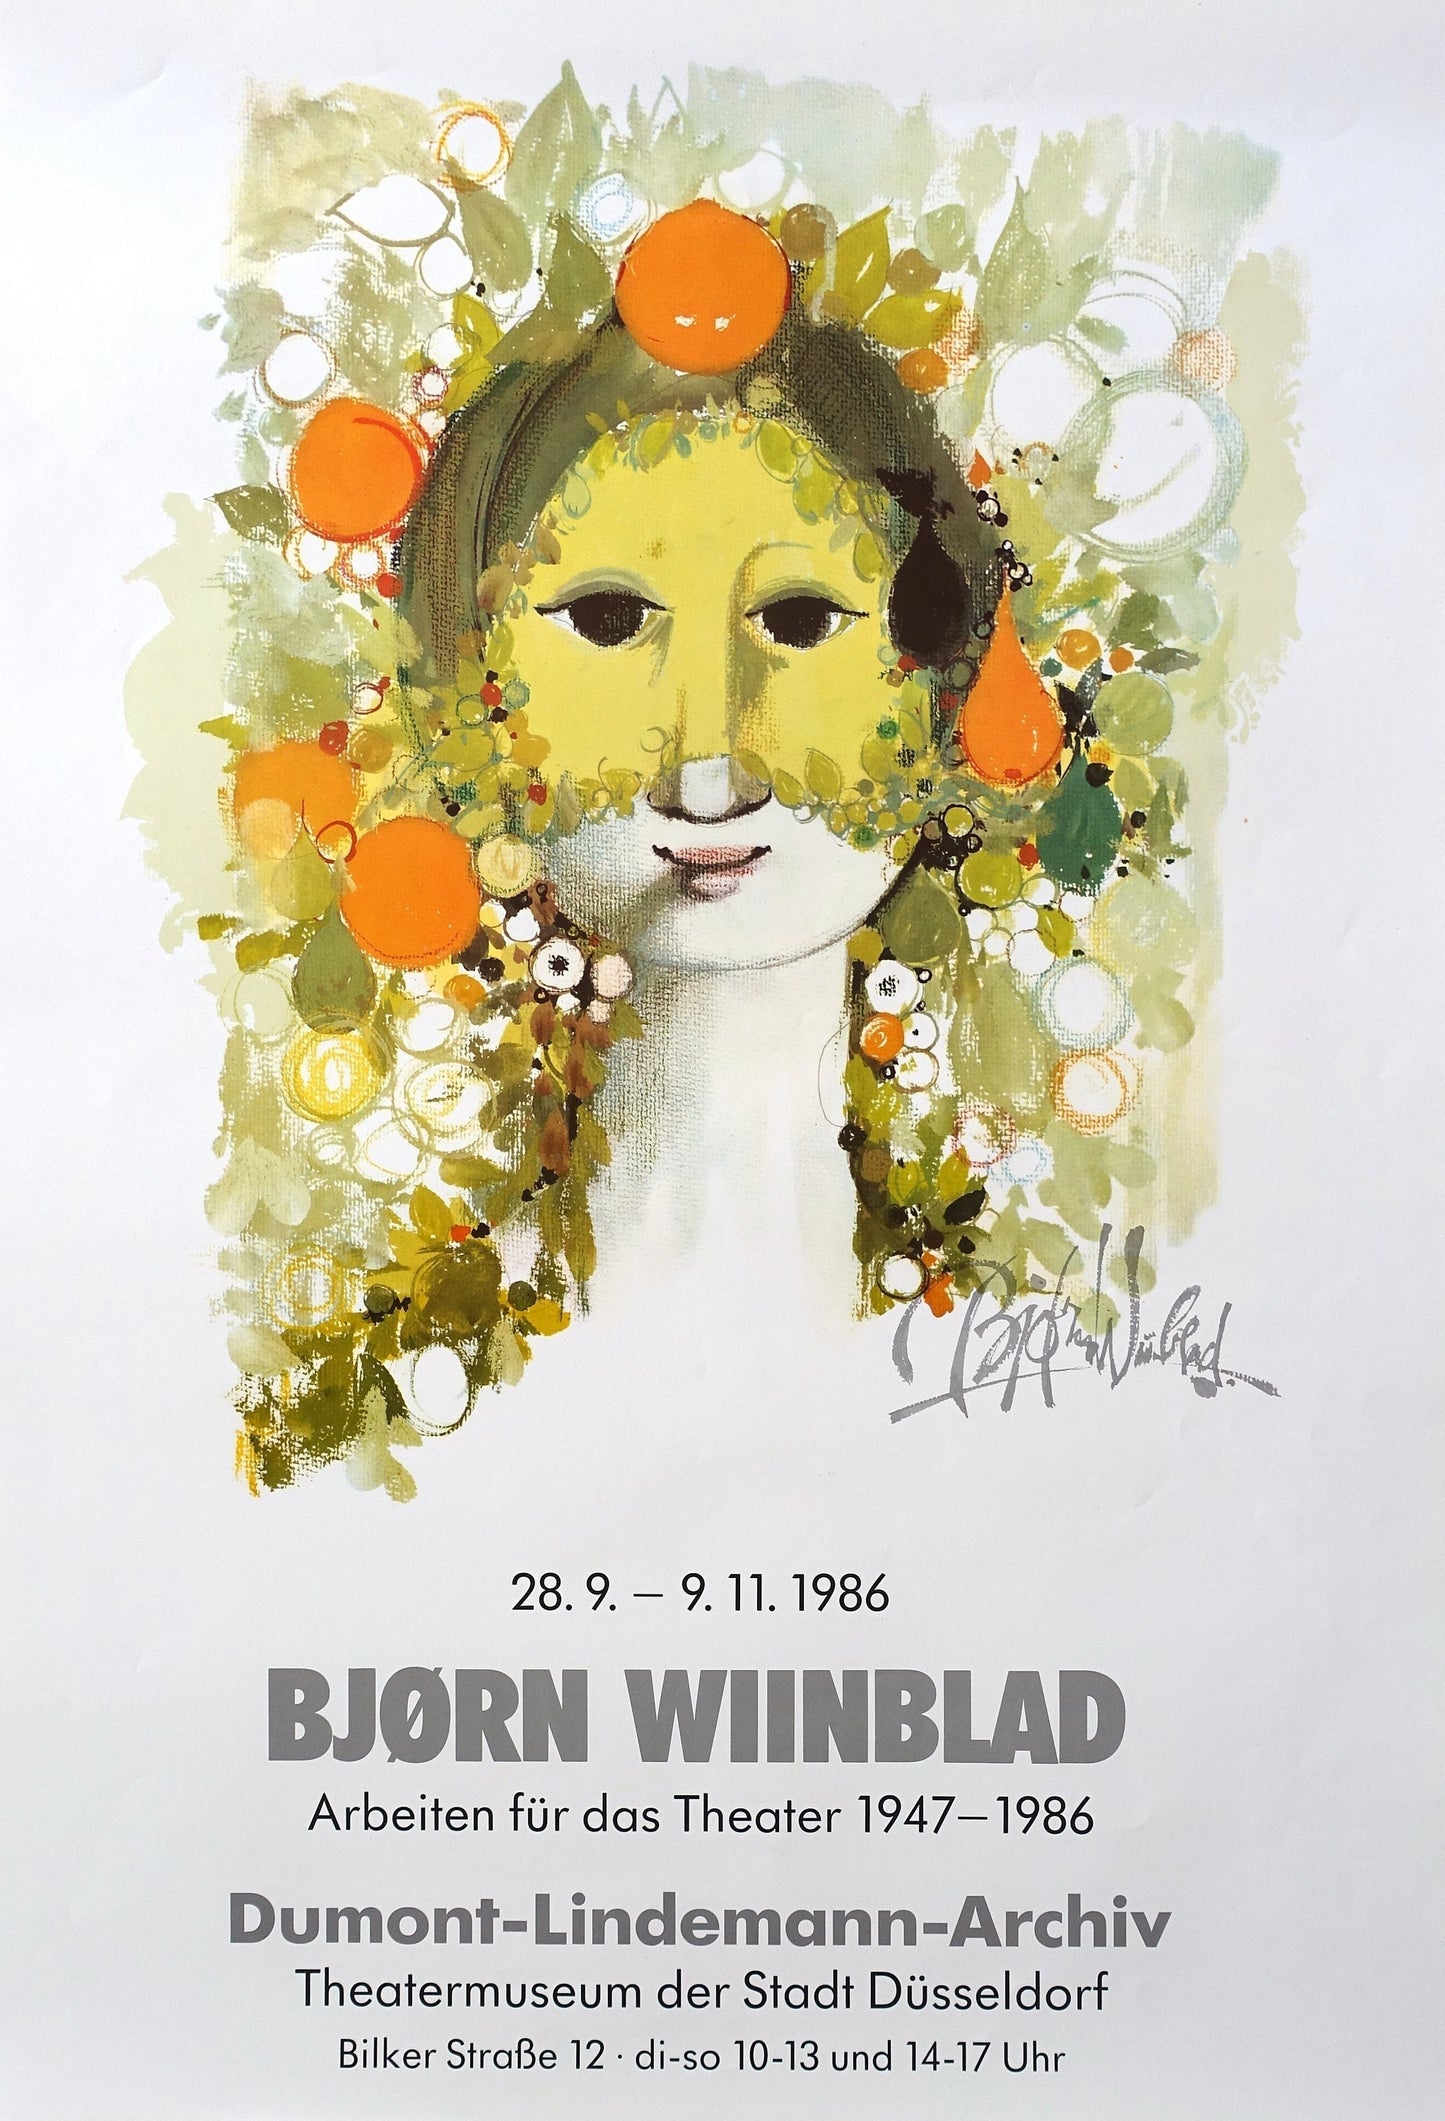 1986 Wiinblad Theater Exhibition Poster Düsseldorf - Original Vintage Poster